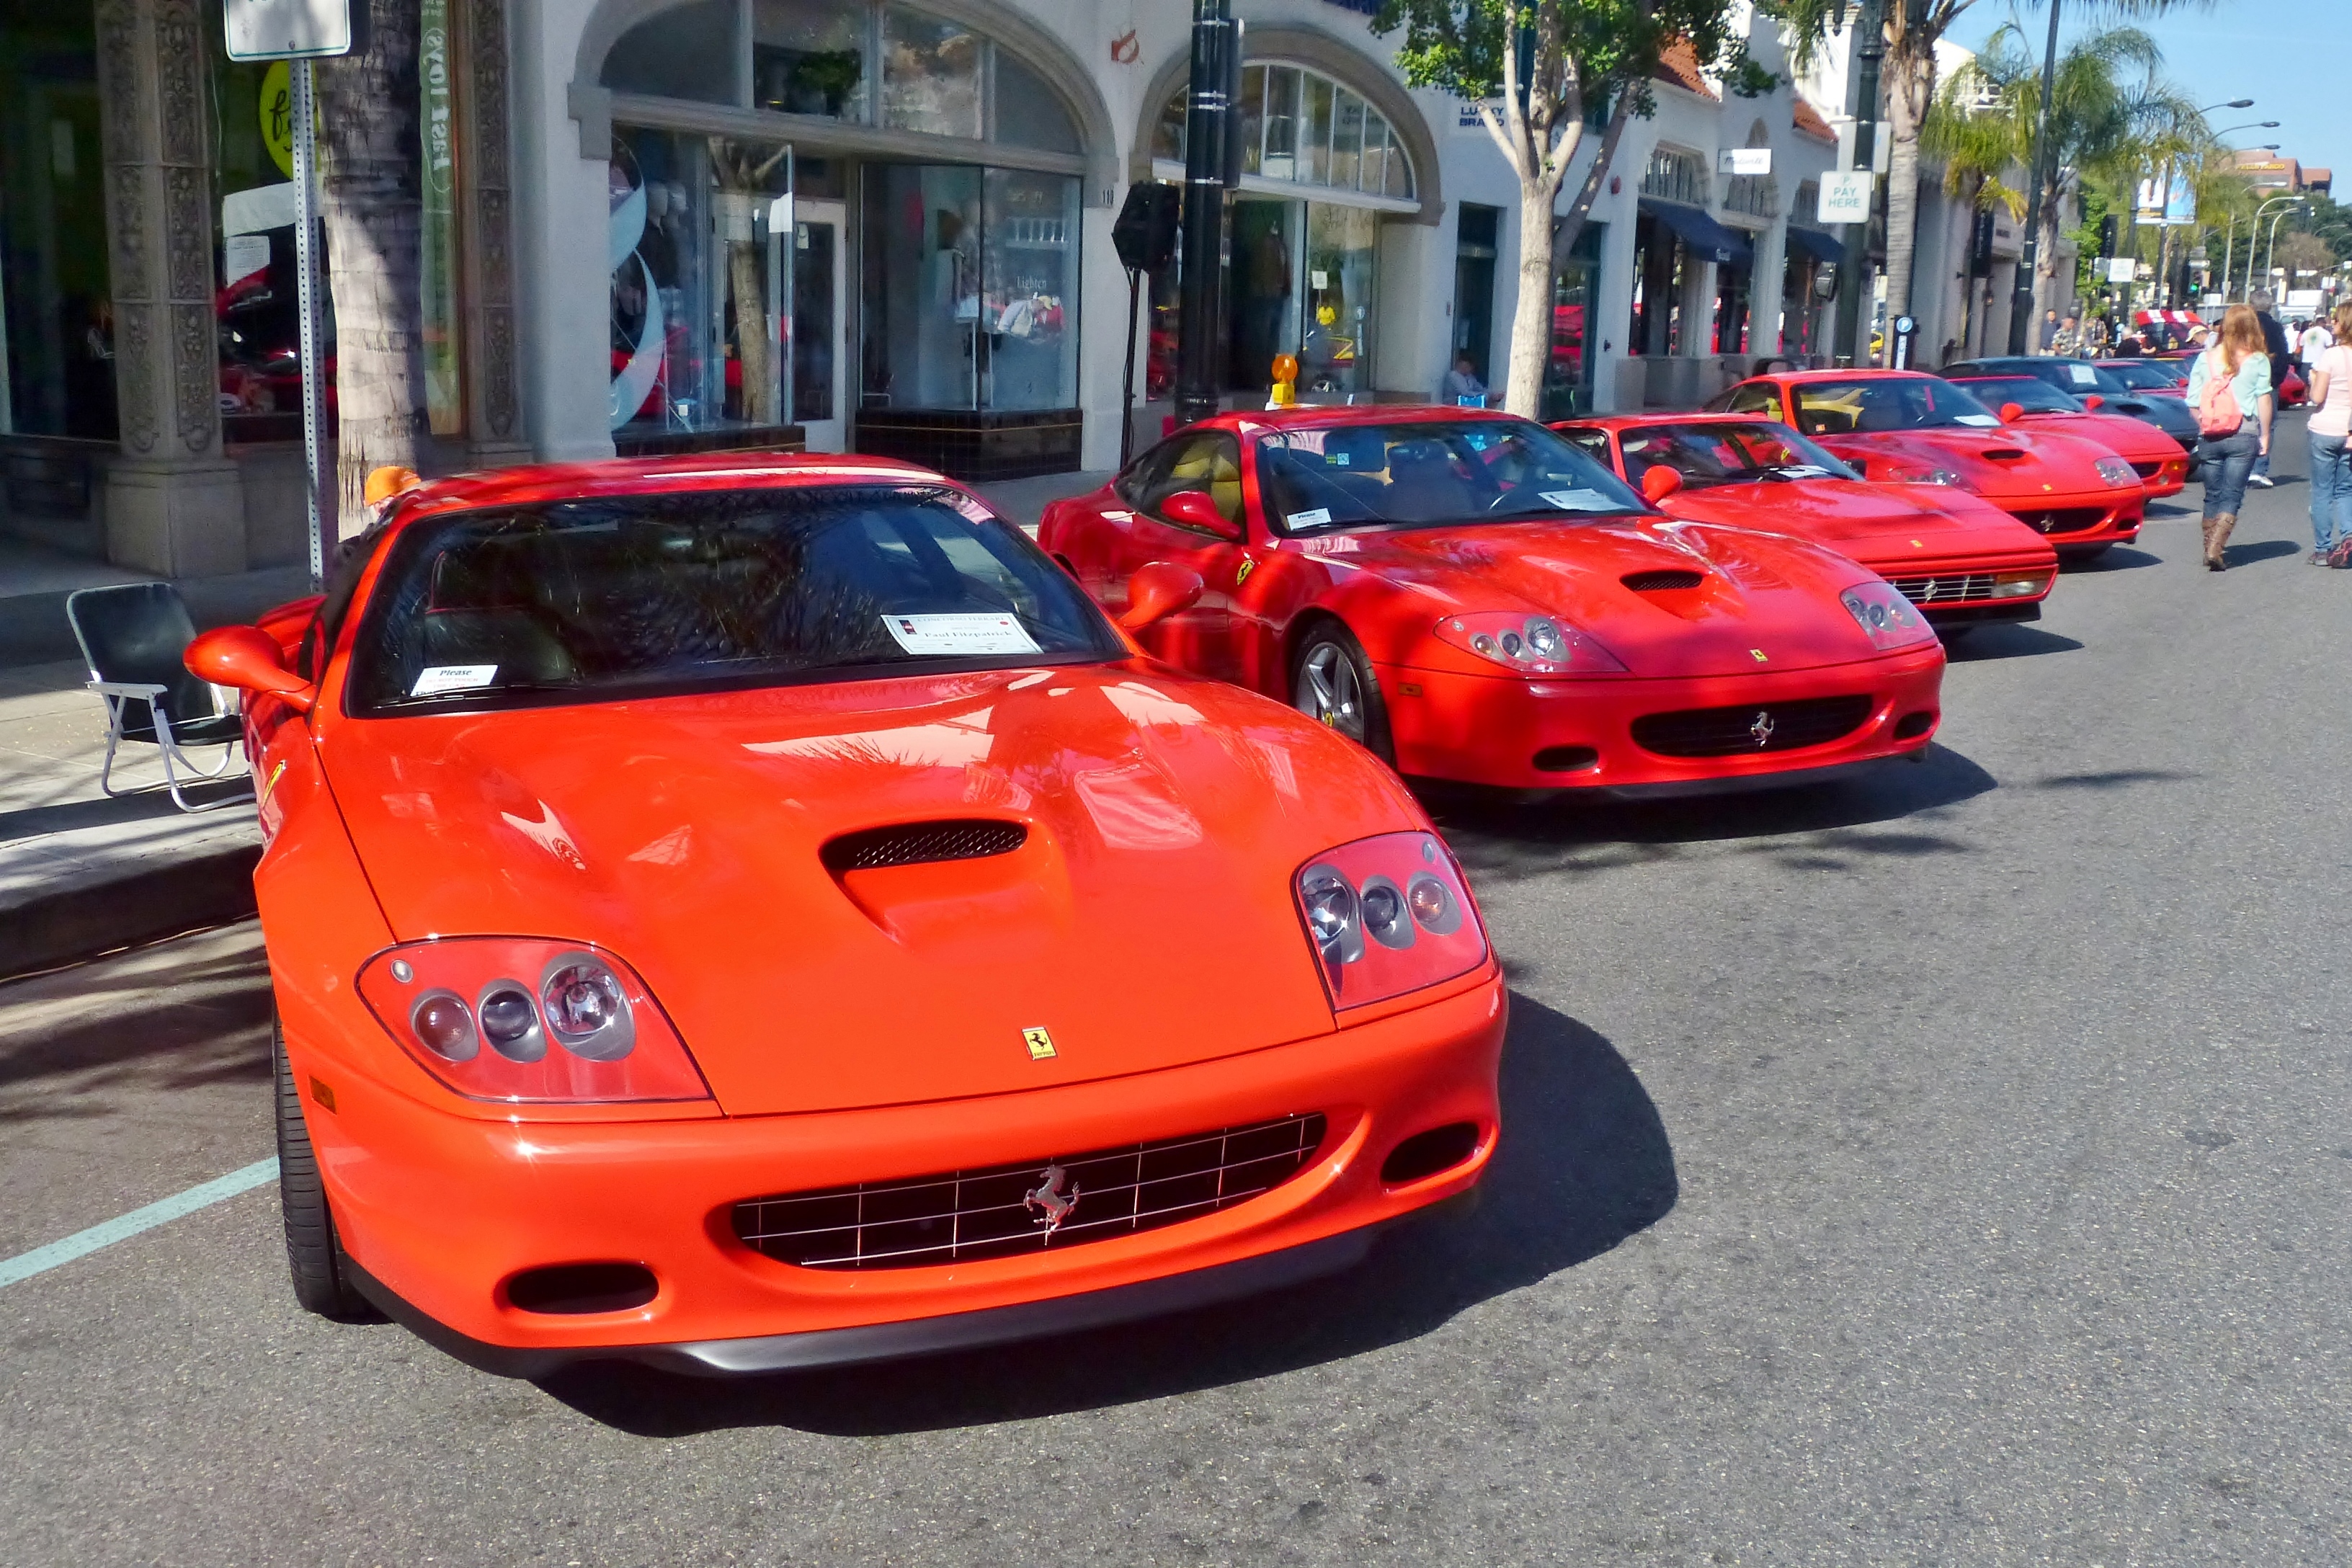 Ferrari Club of America concours, Old Town Pasadena, 2015